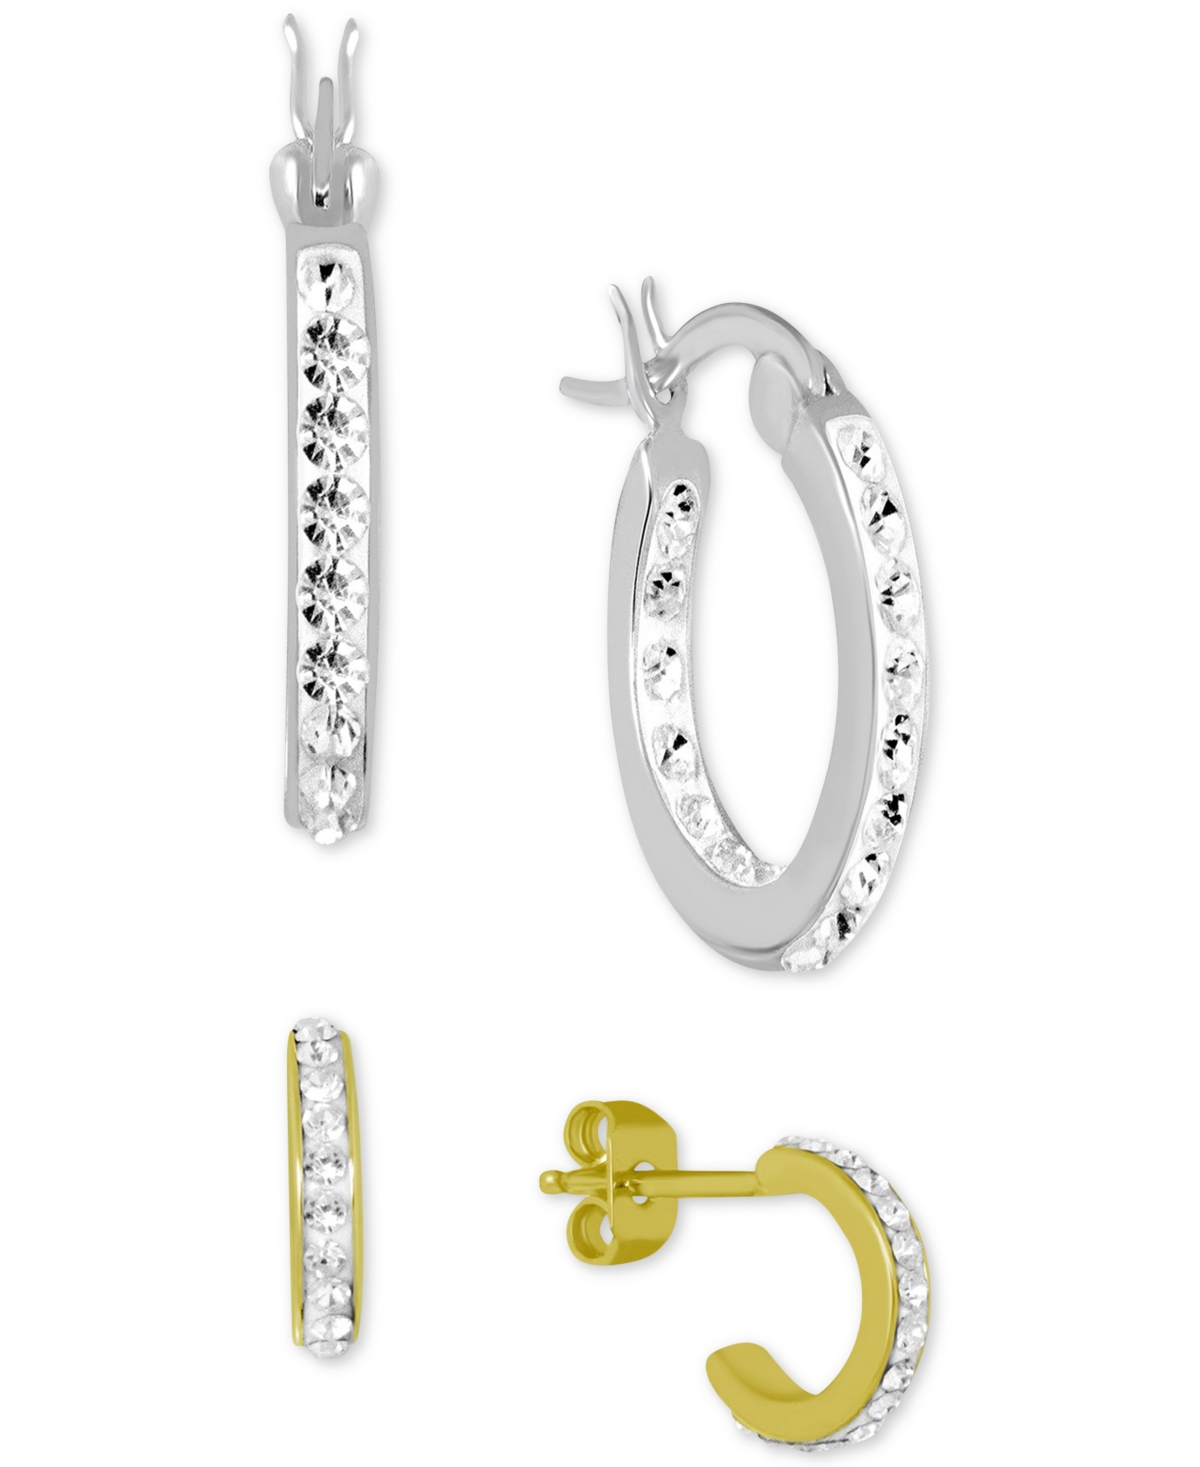 2-Pc. Set Crystal Hoop Earrings in Silver-Plate & Gold-Plate - Two Tone